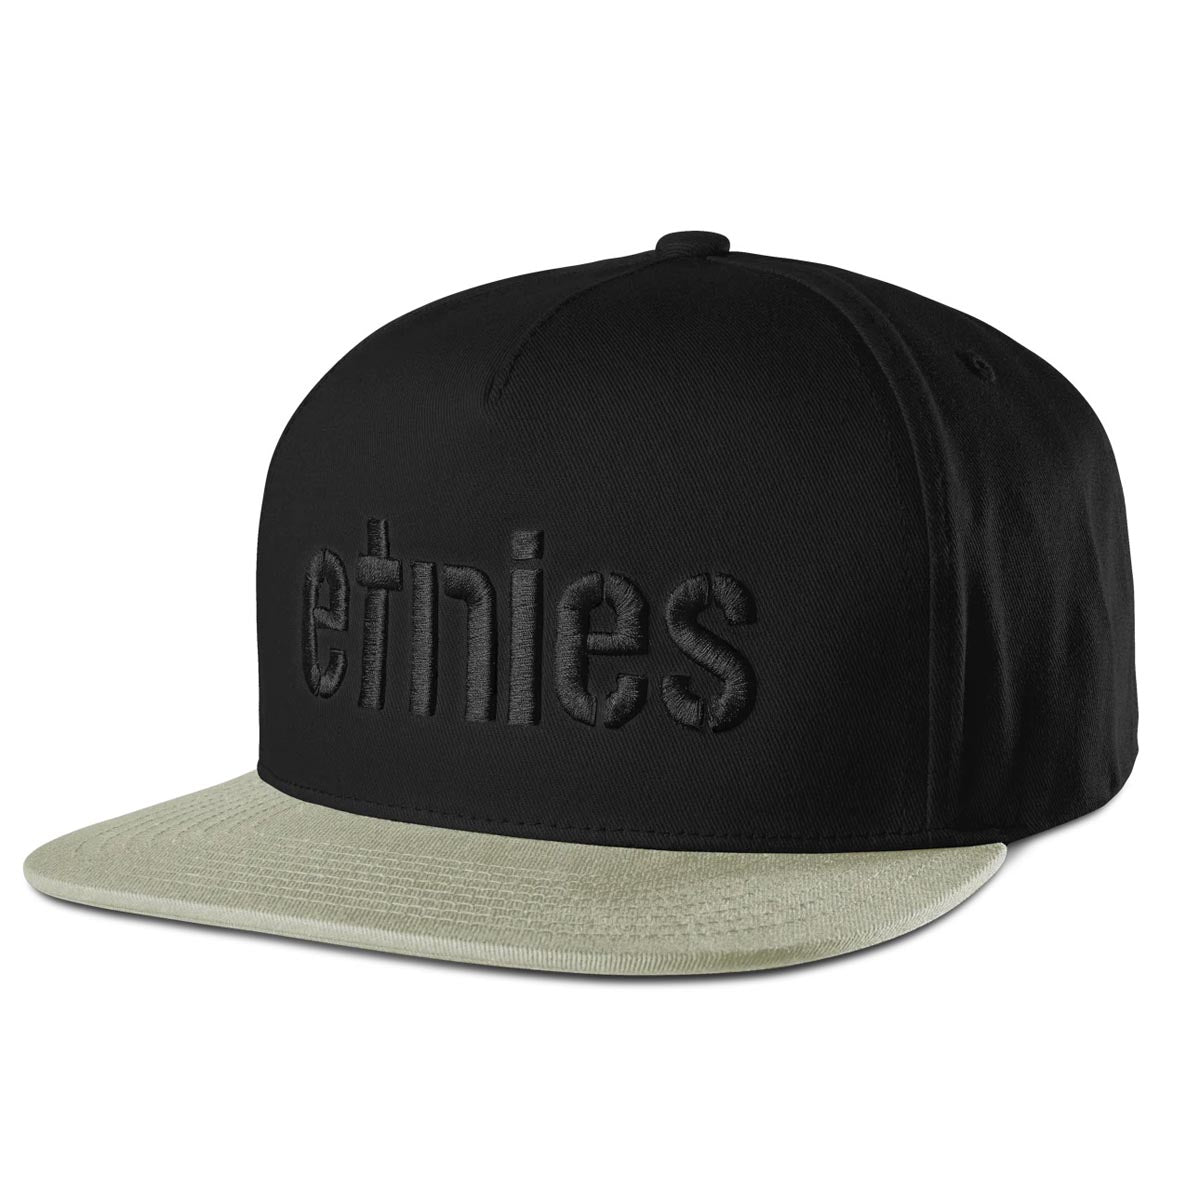 Etnies Corp Snapback Hat - Black/Black/Gum image 1